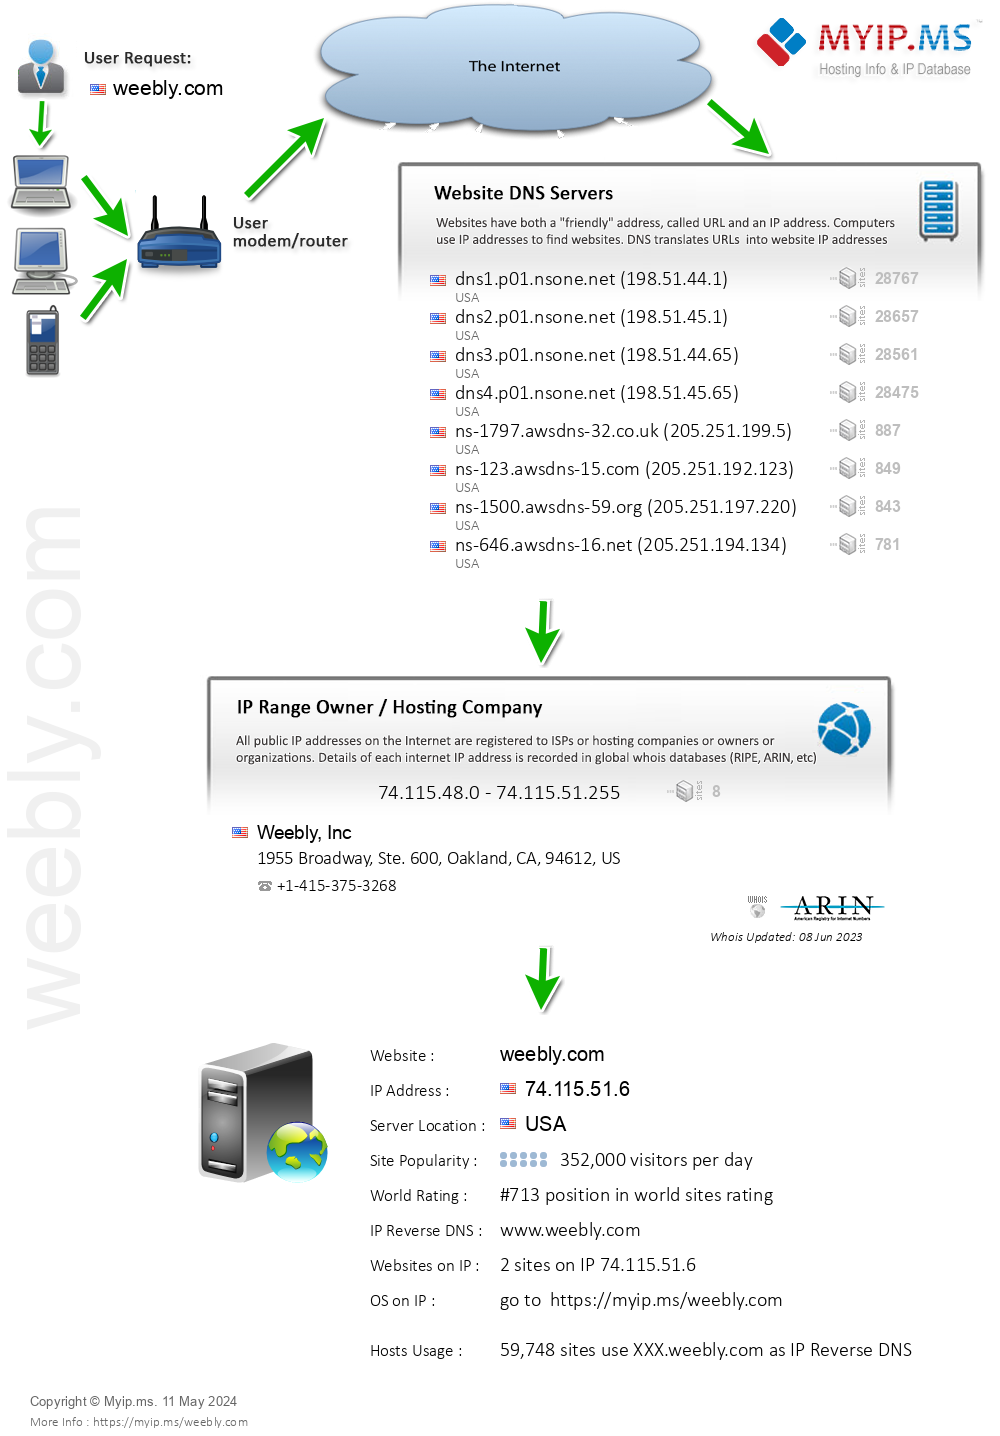 Weebly.com - Website Hosting Visual IP Diagram